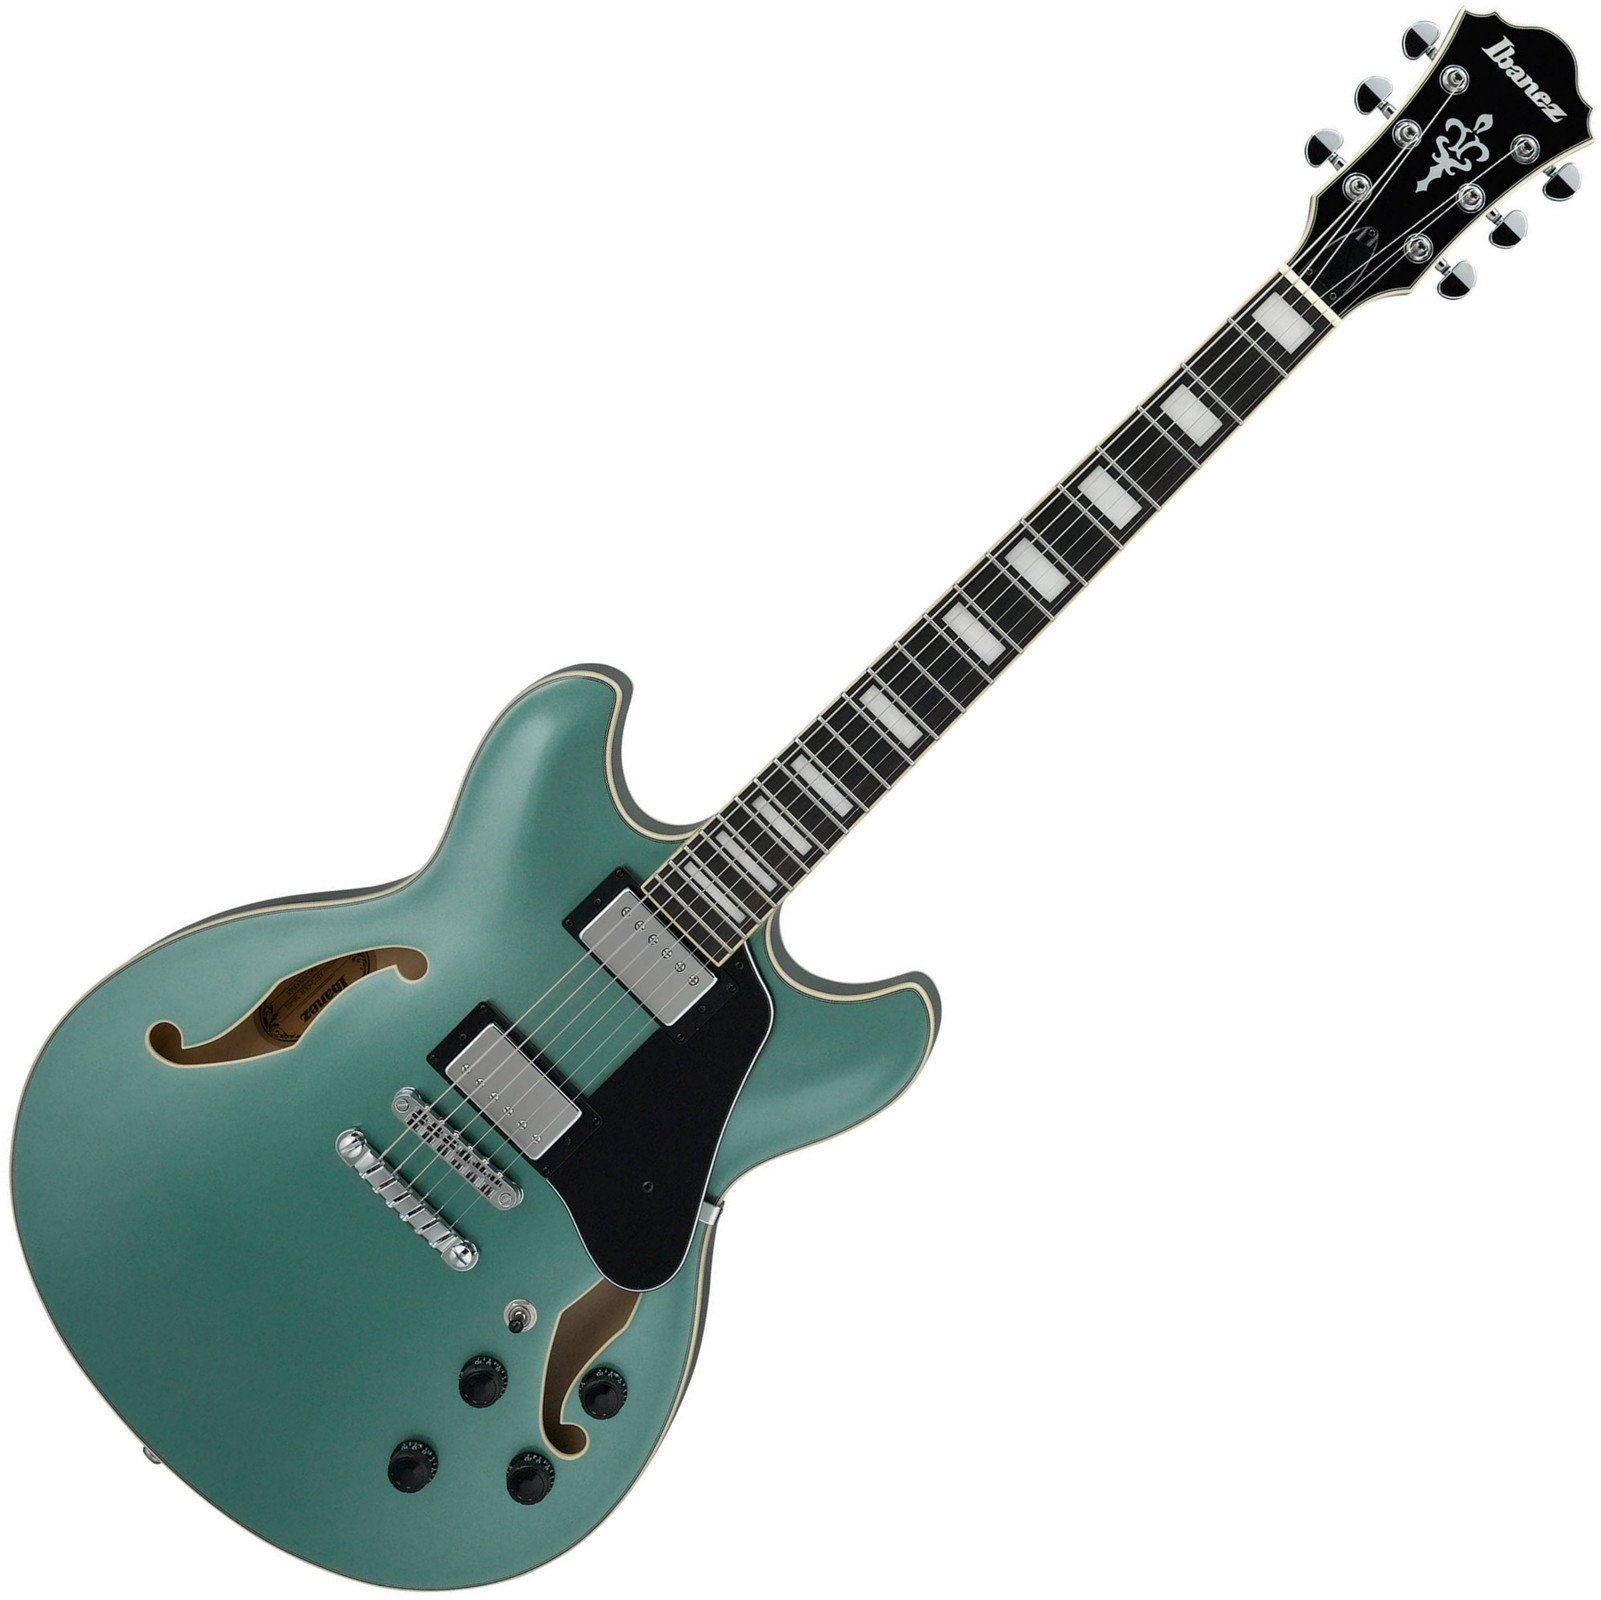 Semiakustická gitara Ibanez AS73-OLM Olive Metallic